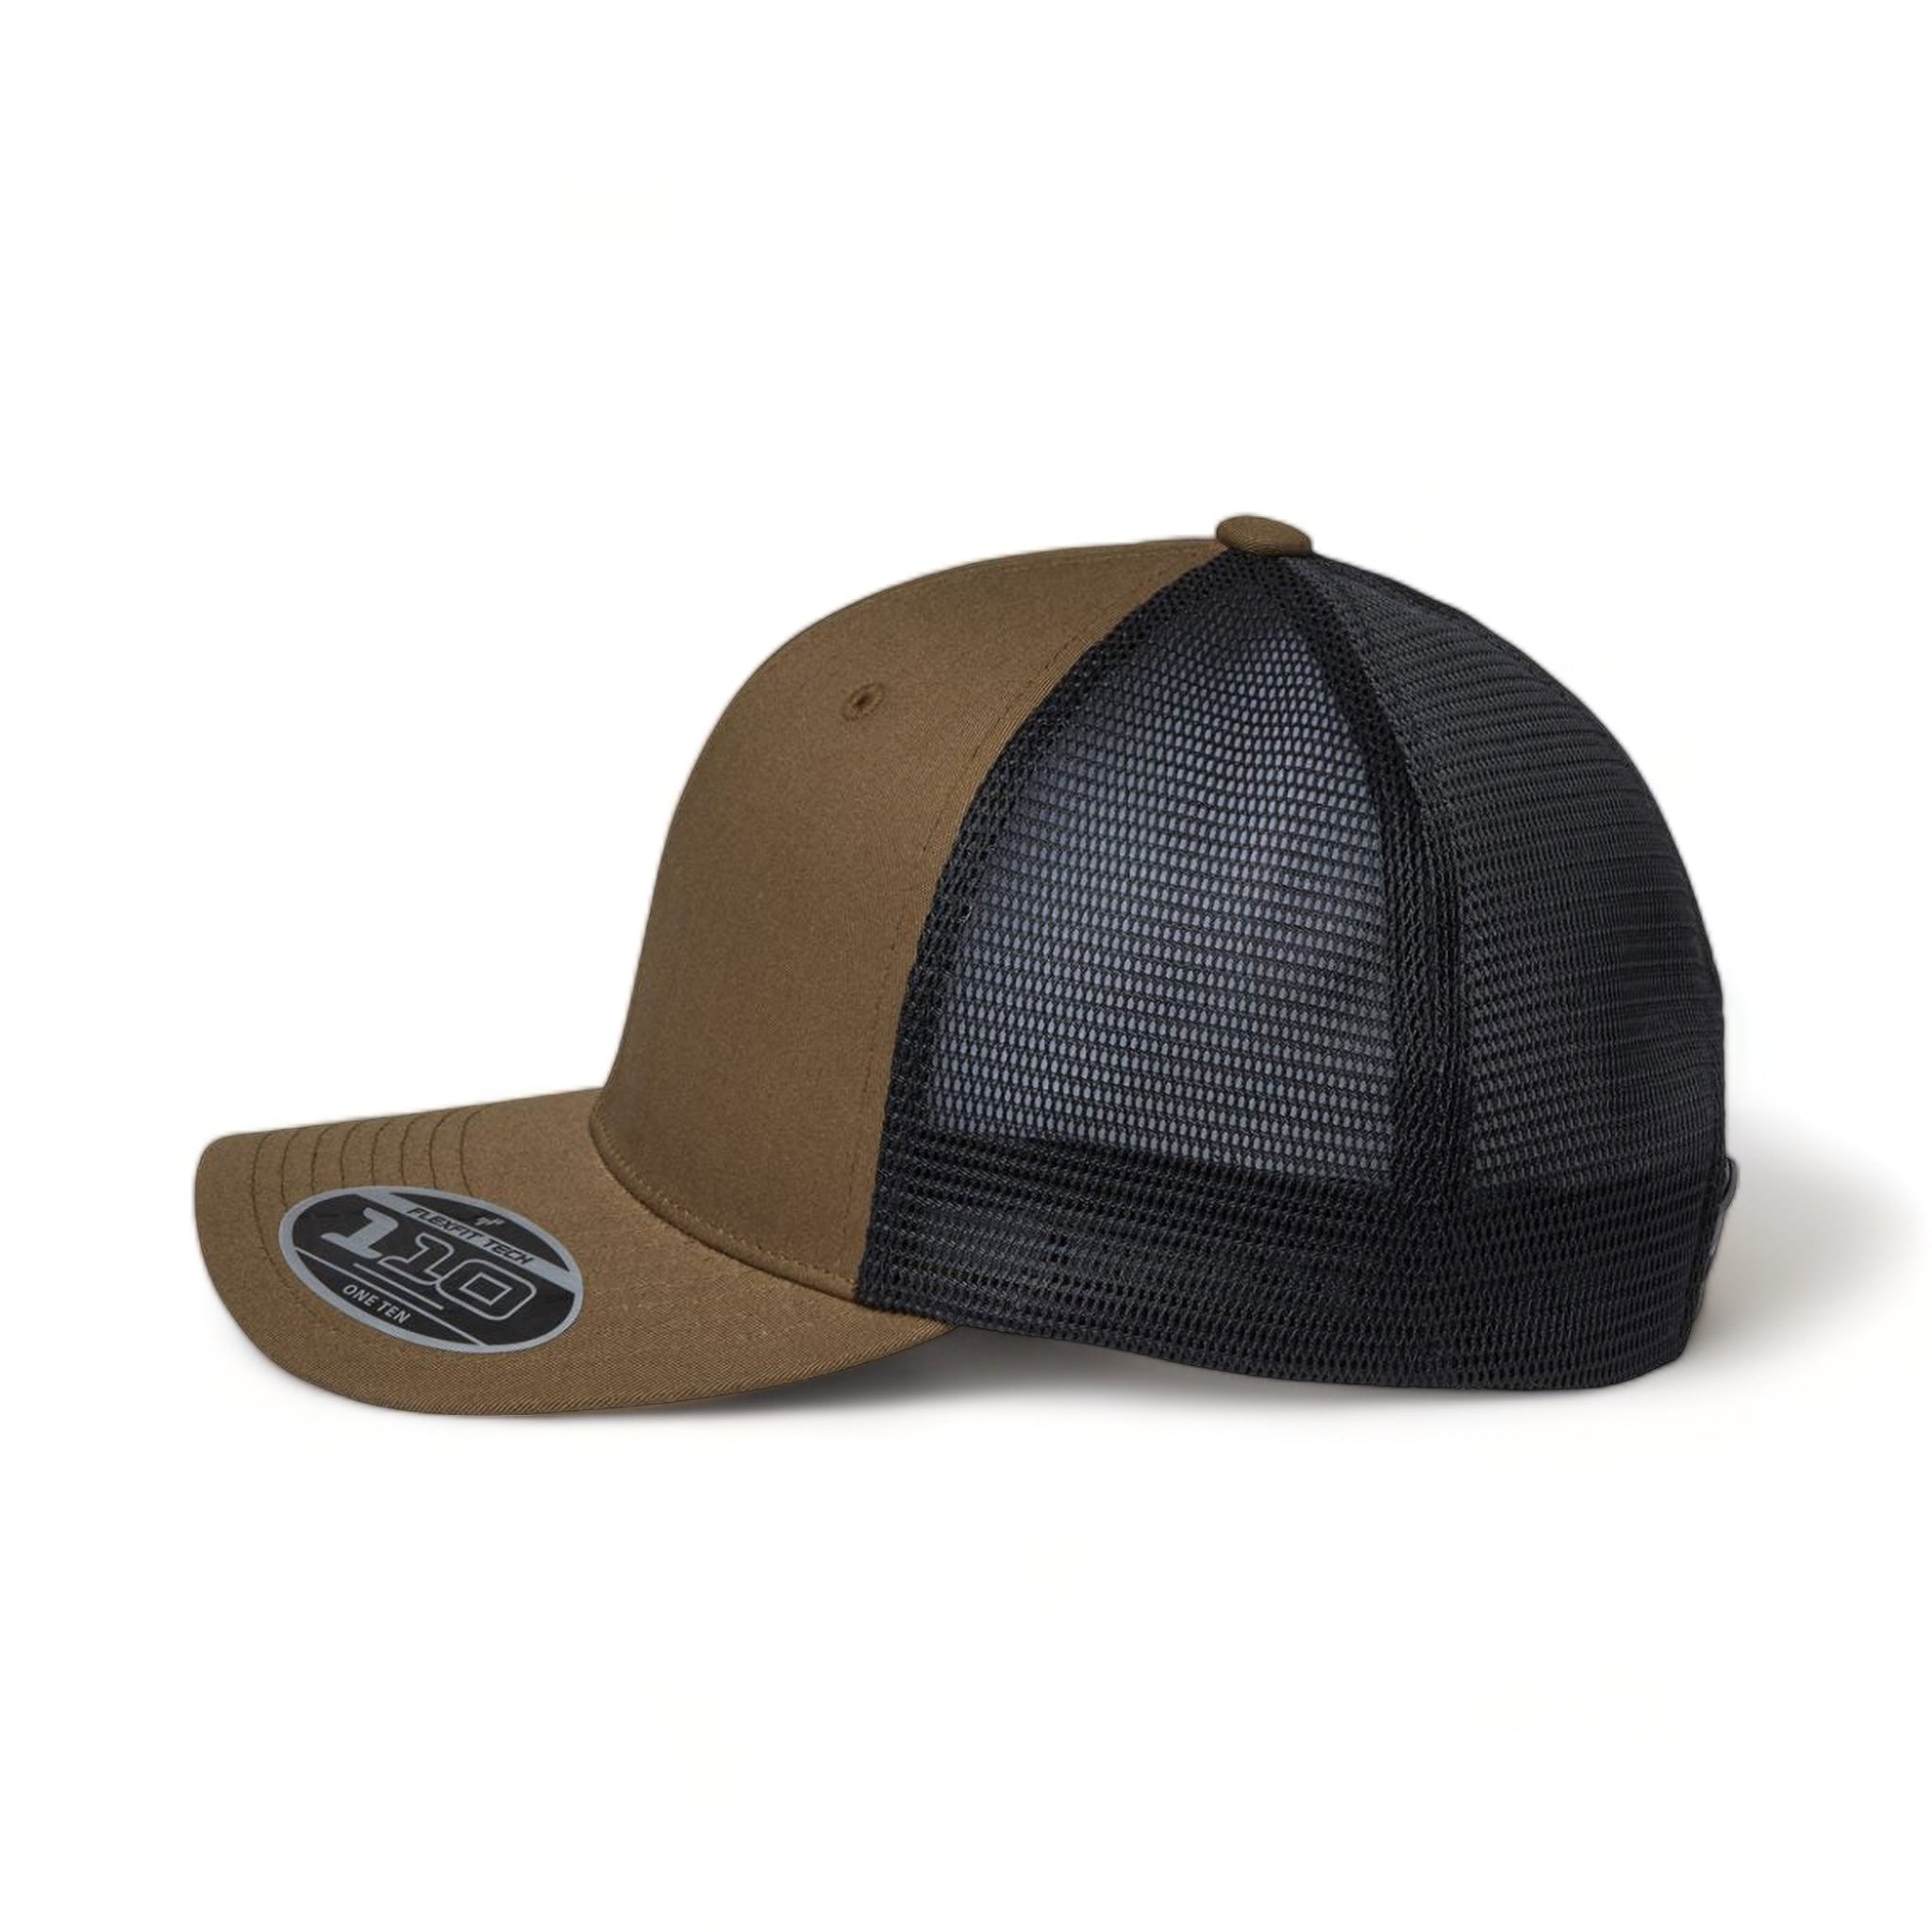 Side view of Flexfit 110M custom hat in coyote brown and black